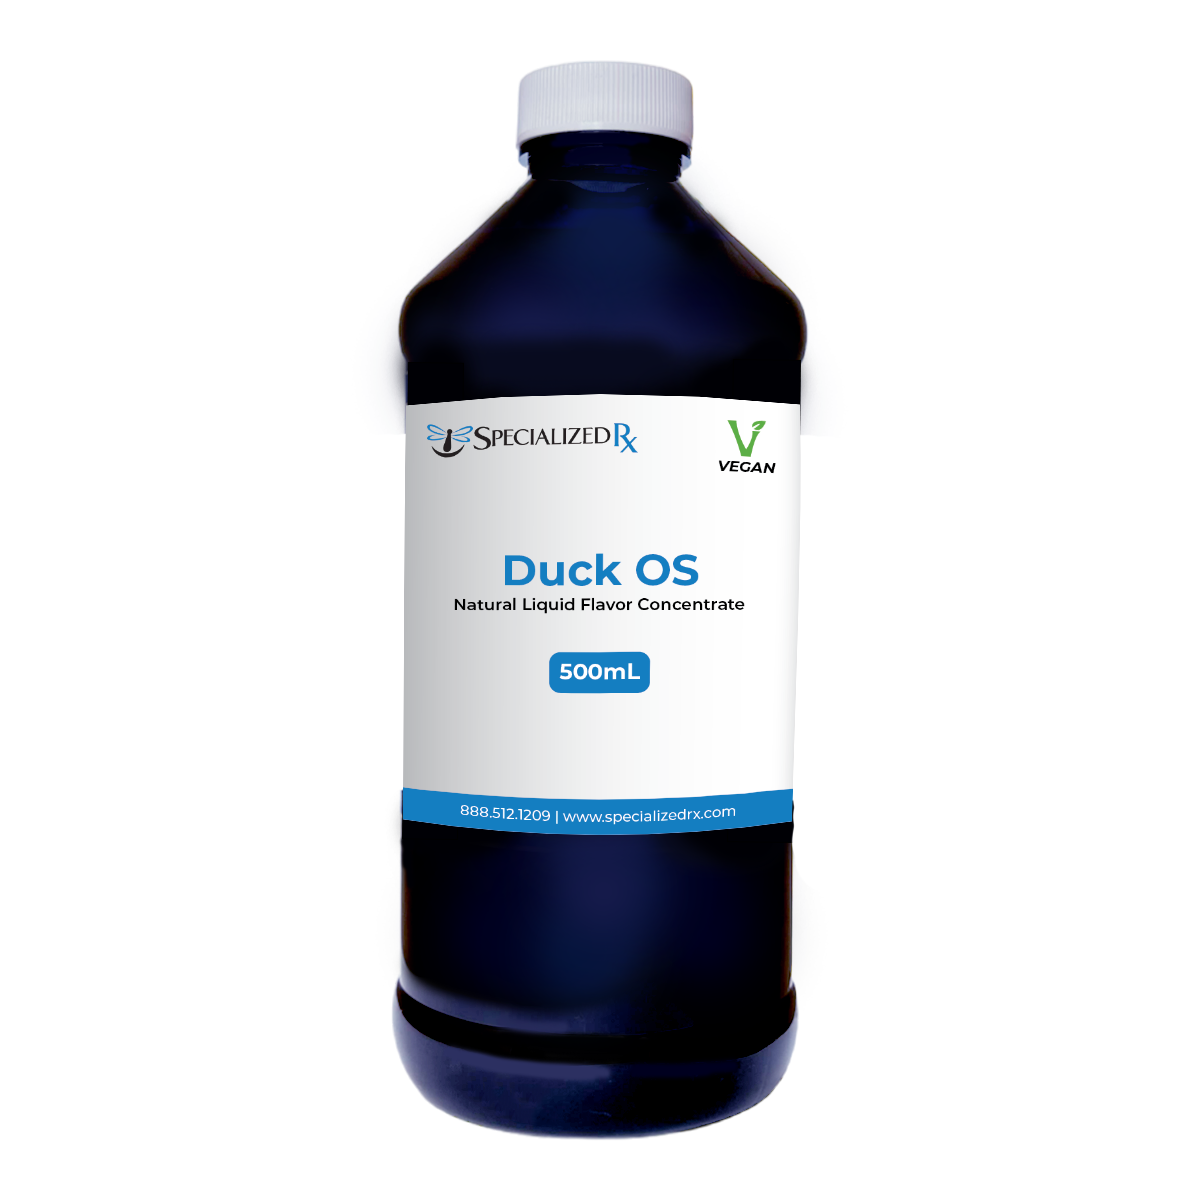 Duck OS Natural Liquid Flavor Concentrate - Vegan